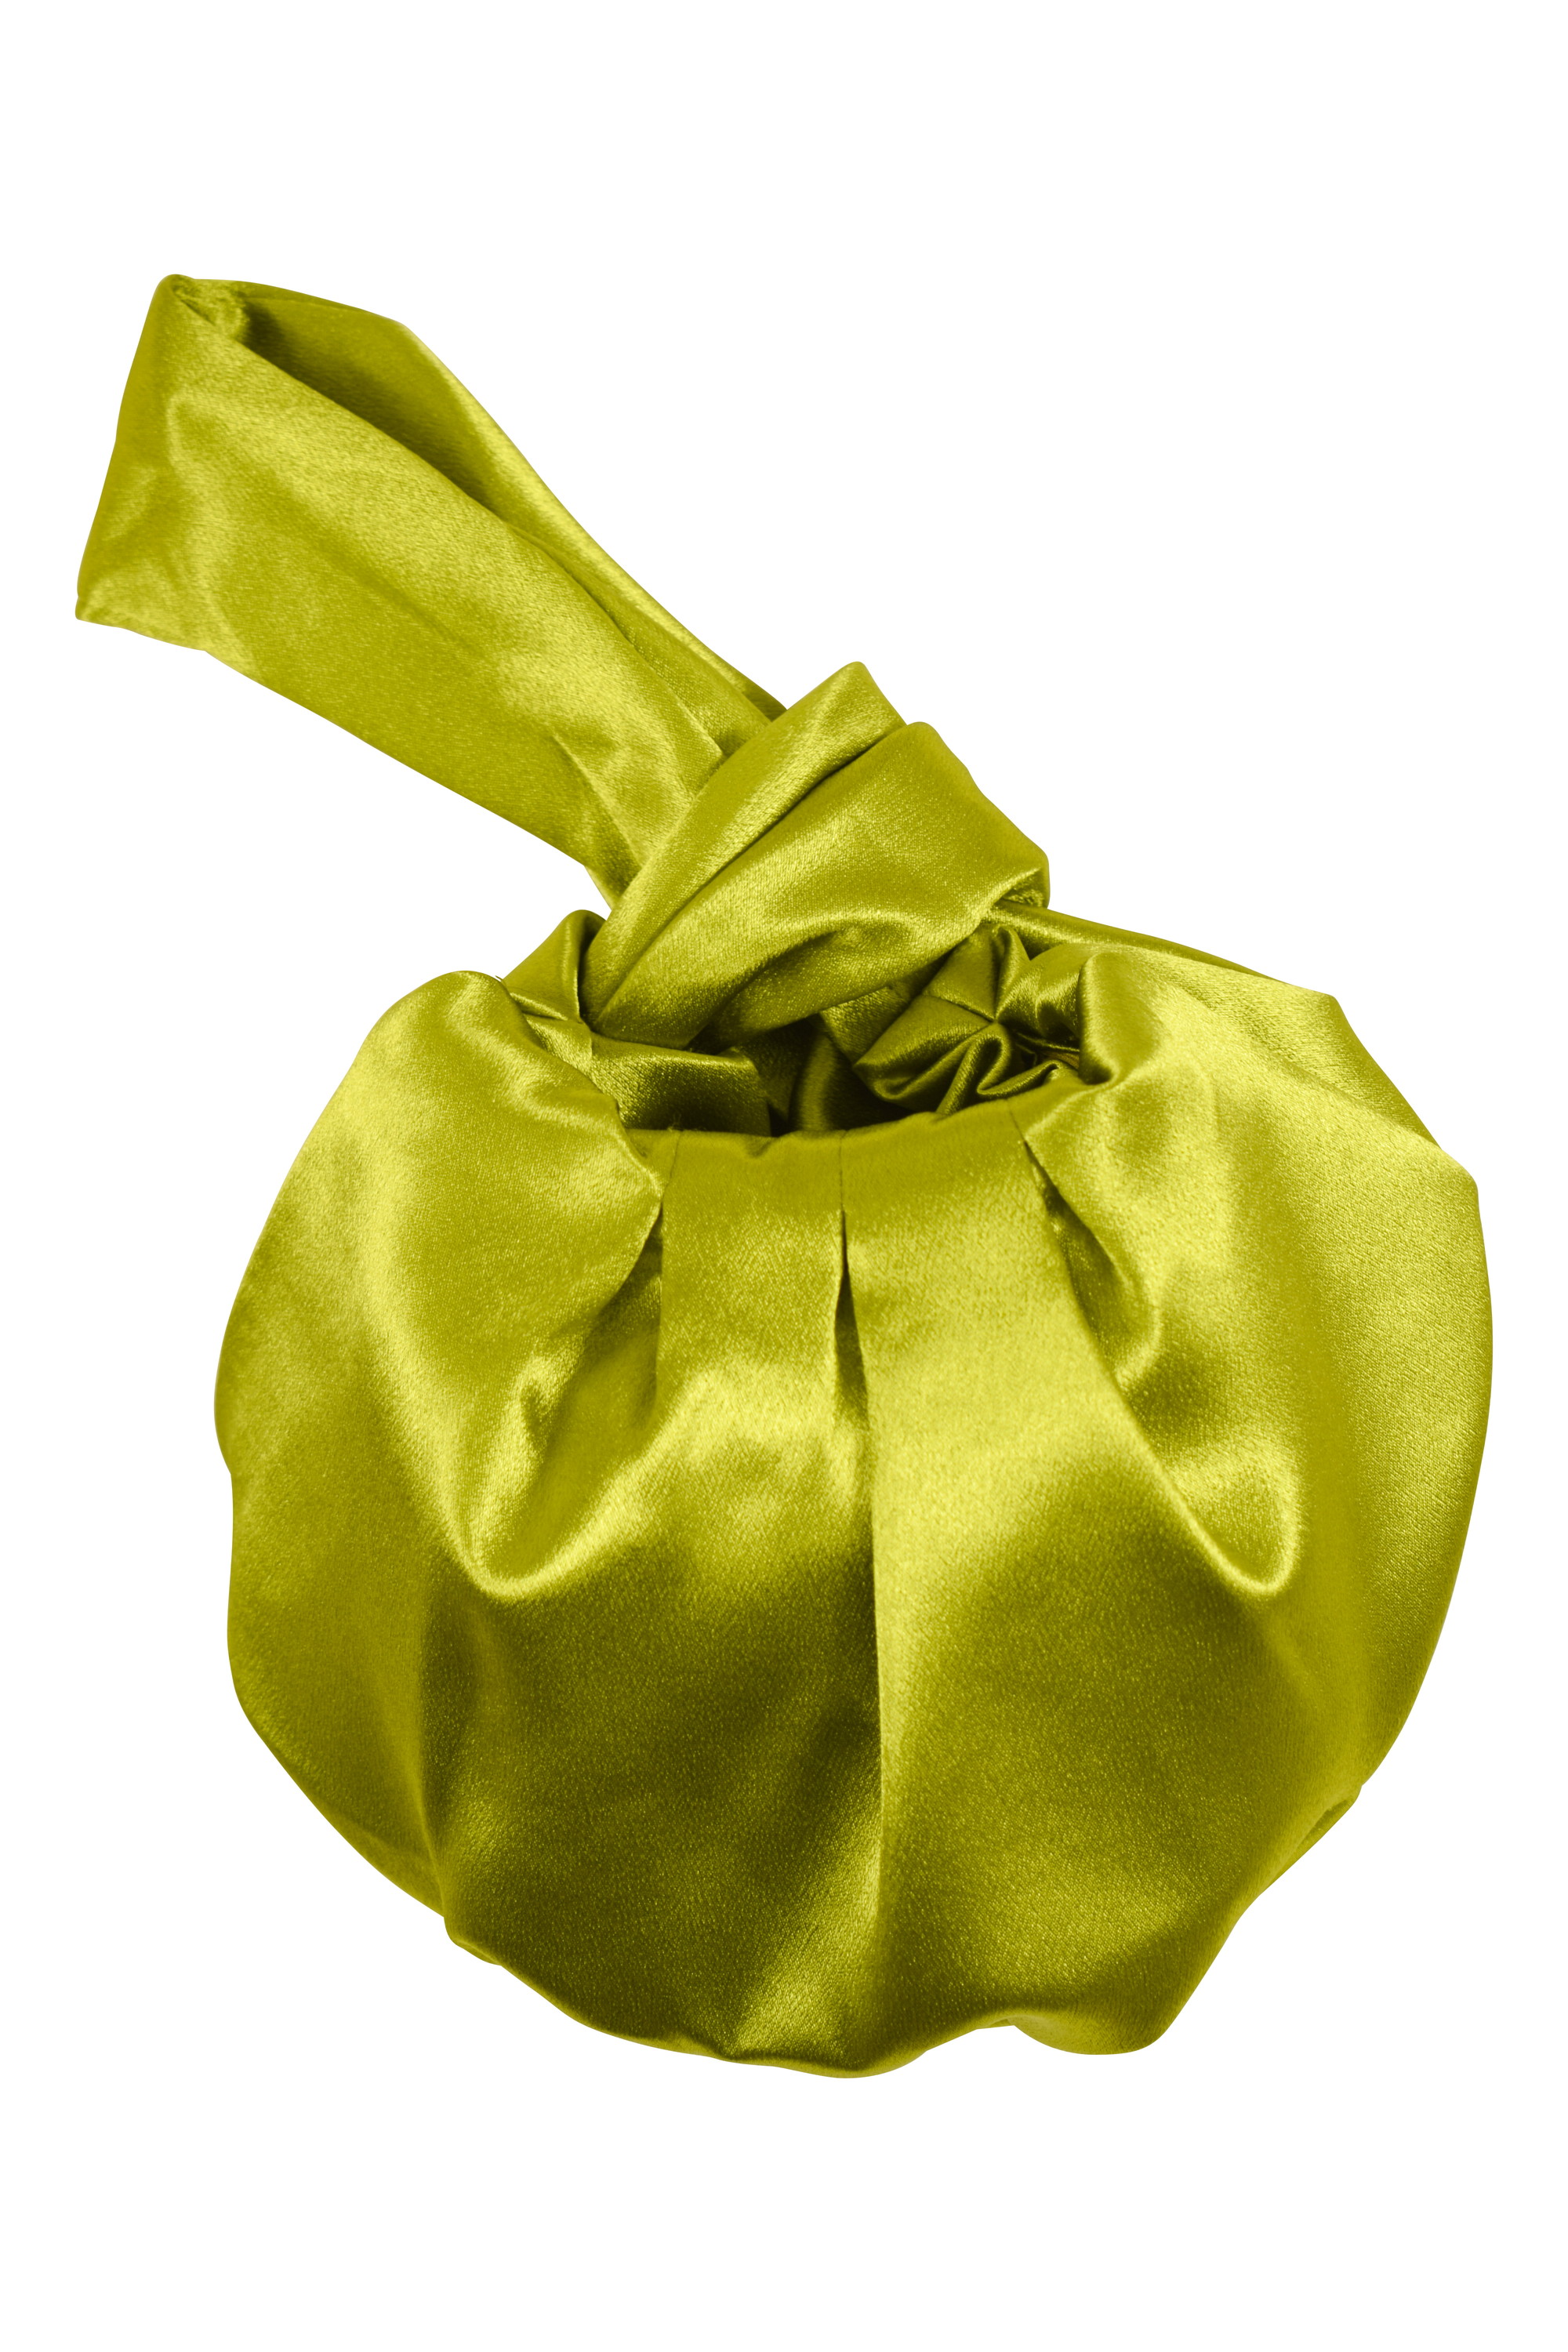 ANDRESD ワンハンドルたまご型グリーンバッグ